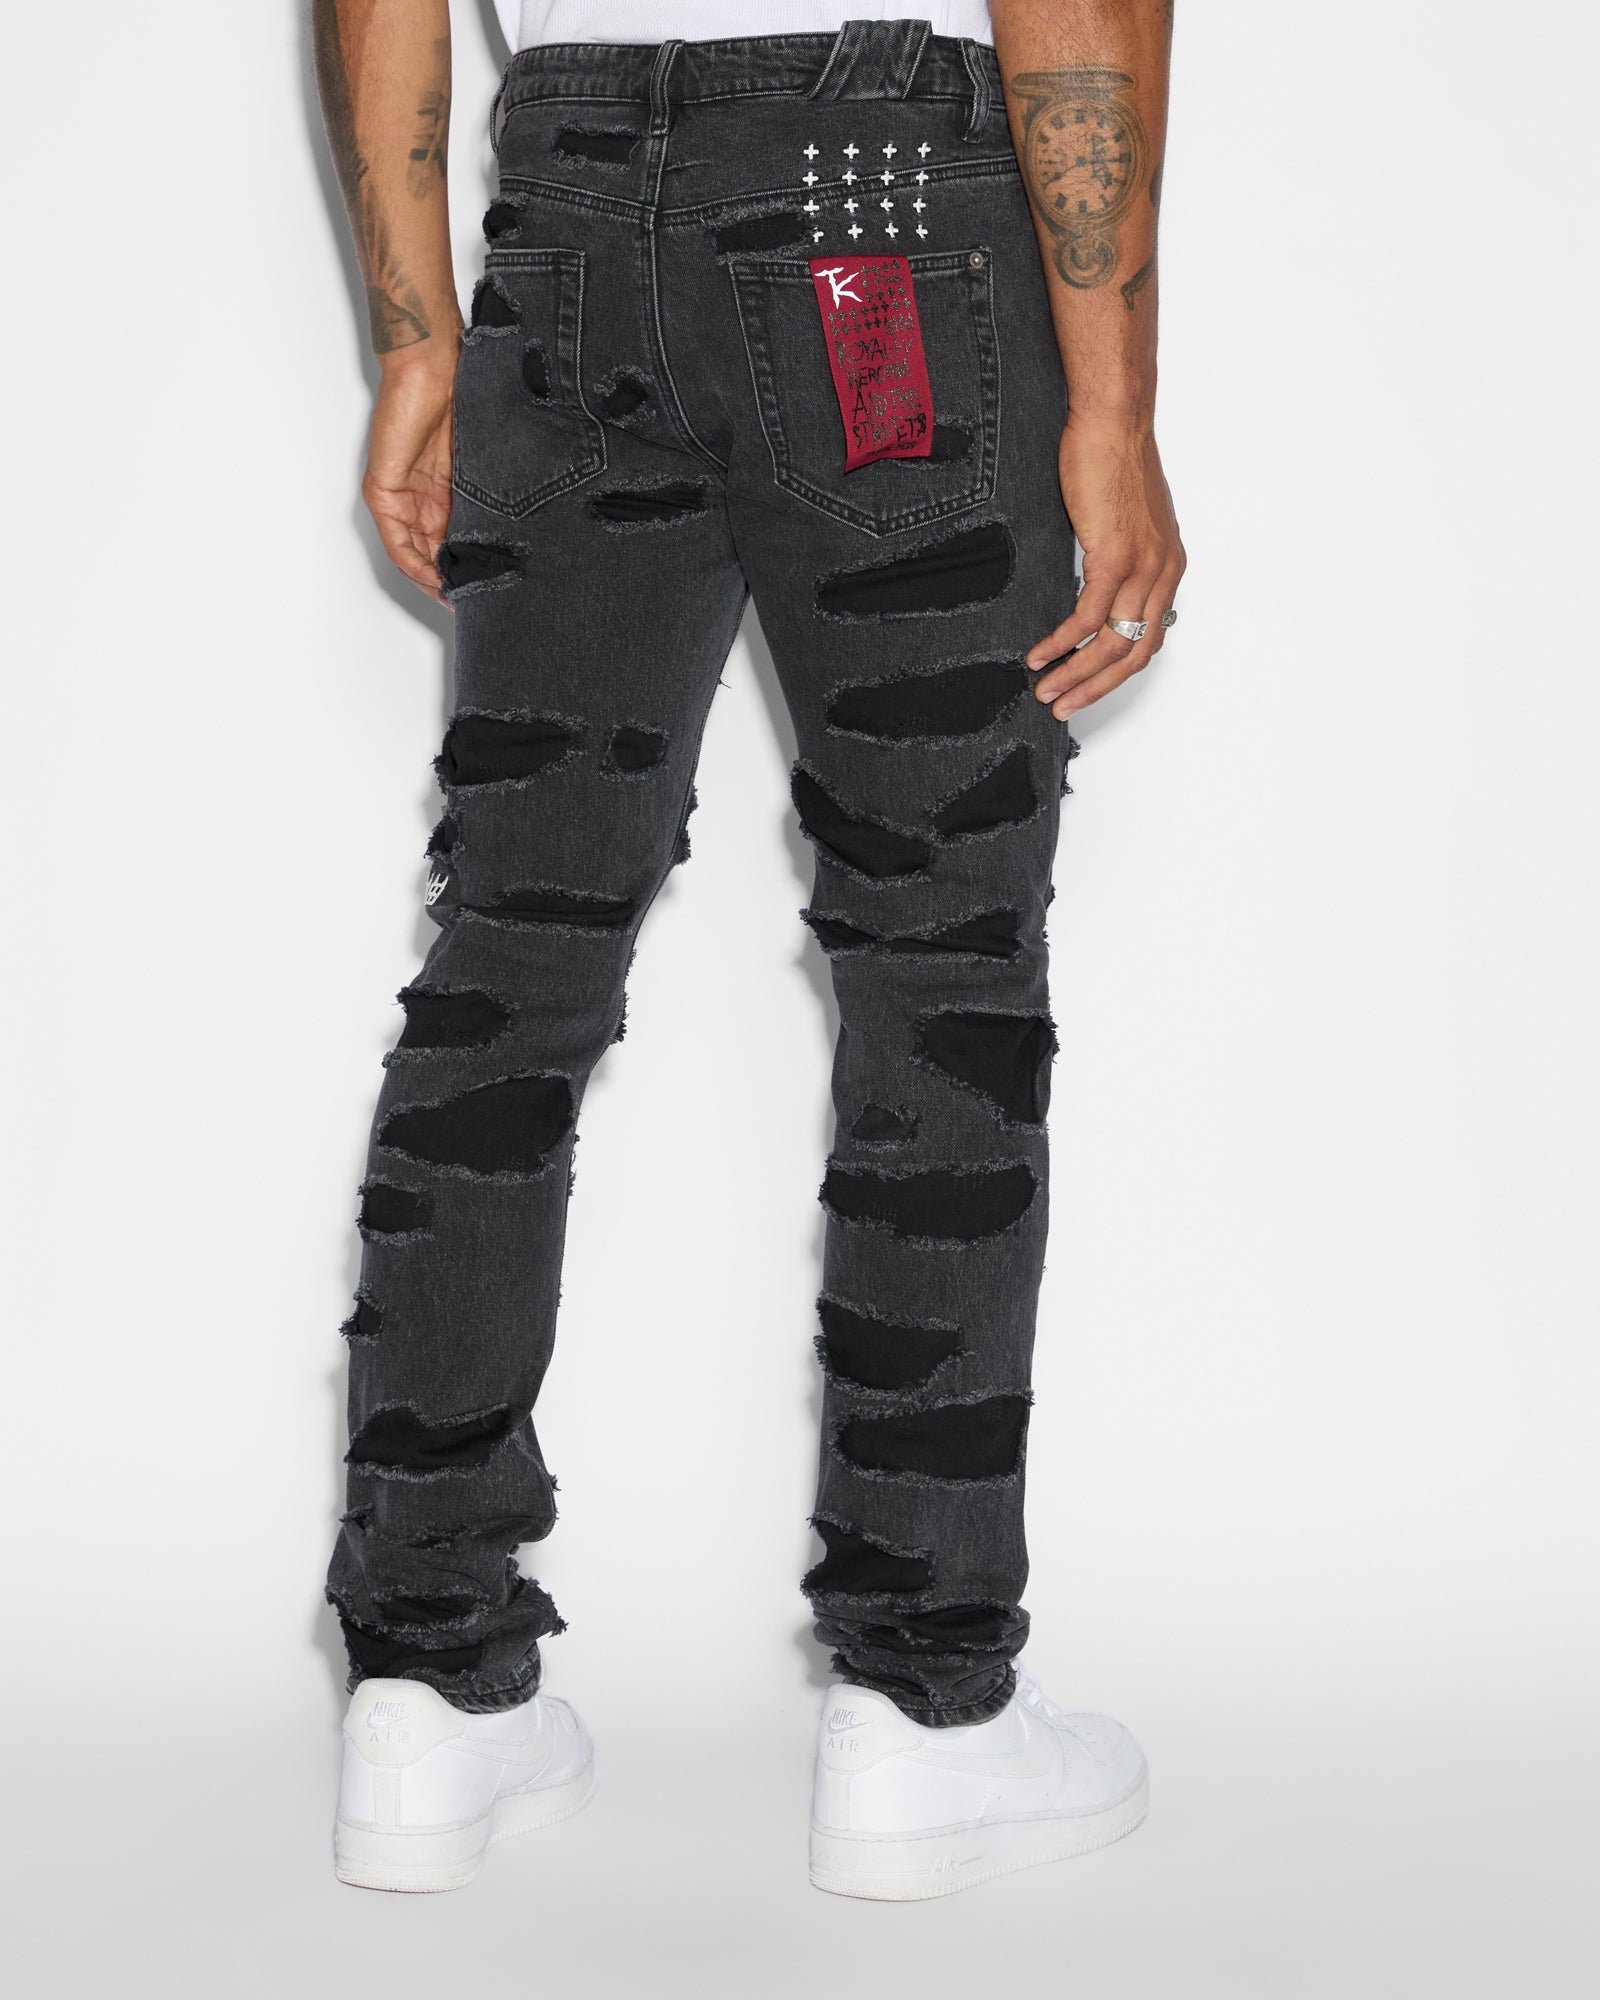 Chitch Slim Fit Jeans - Shredded Black Denim | Ksubi ++